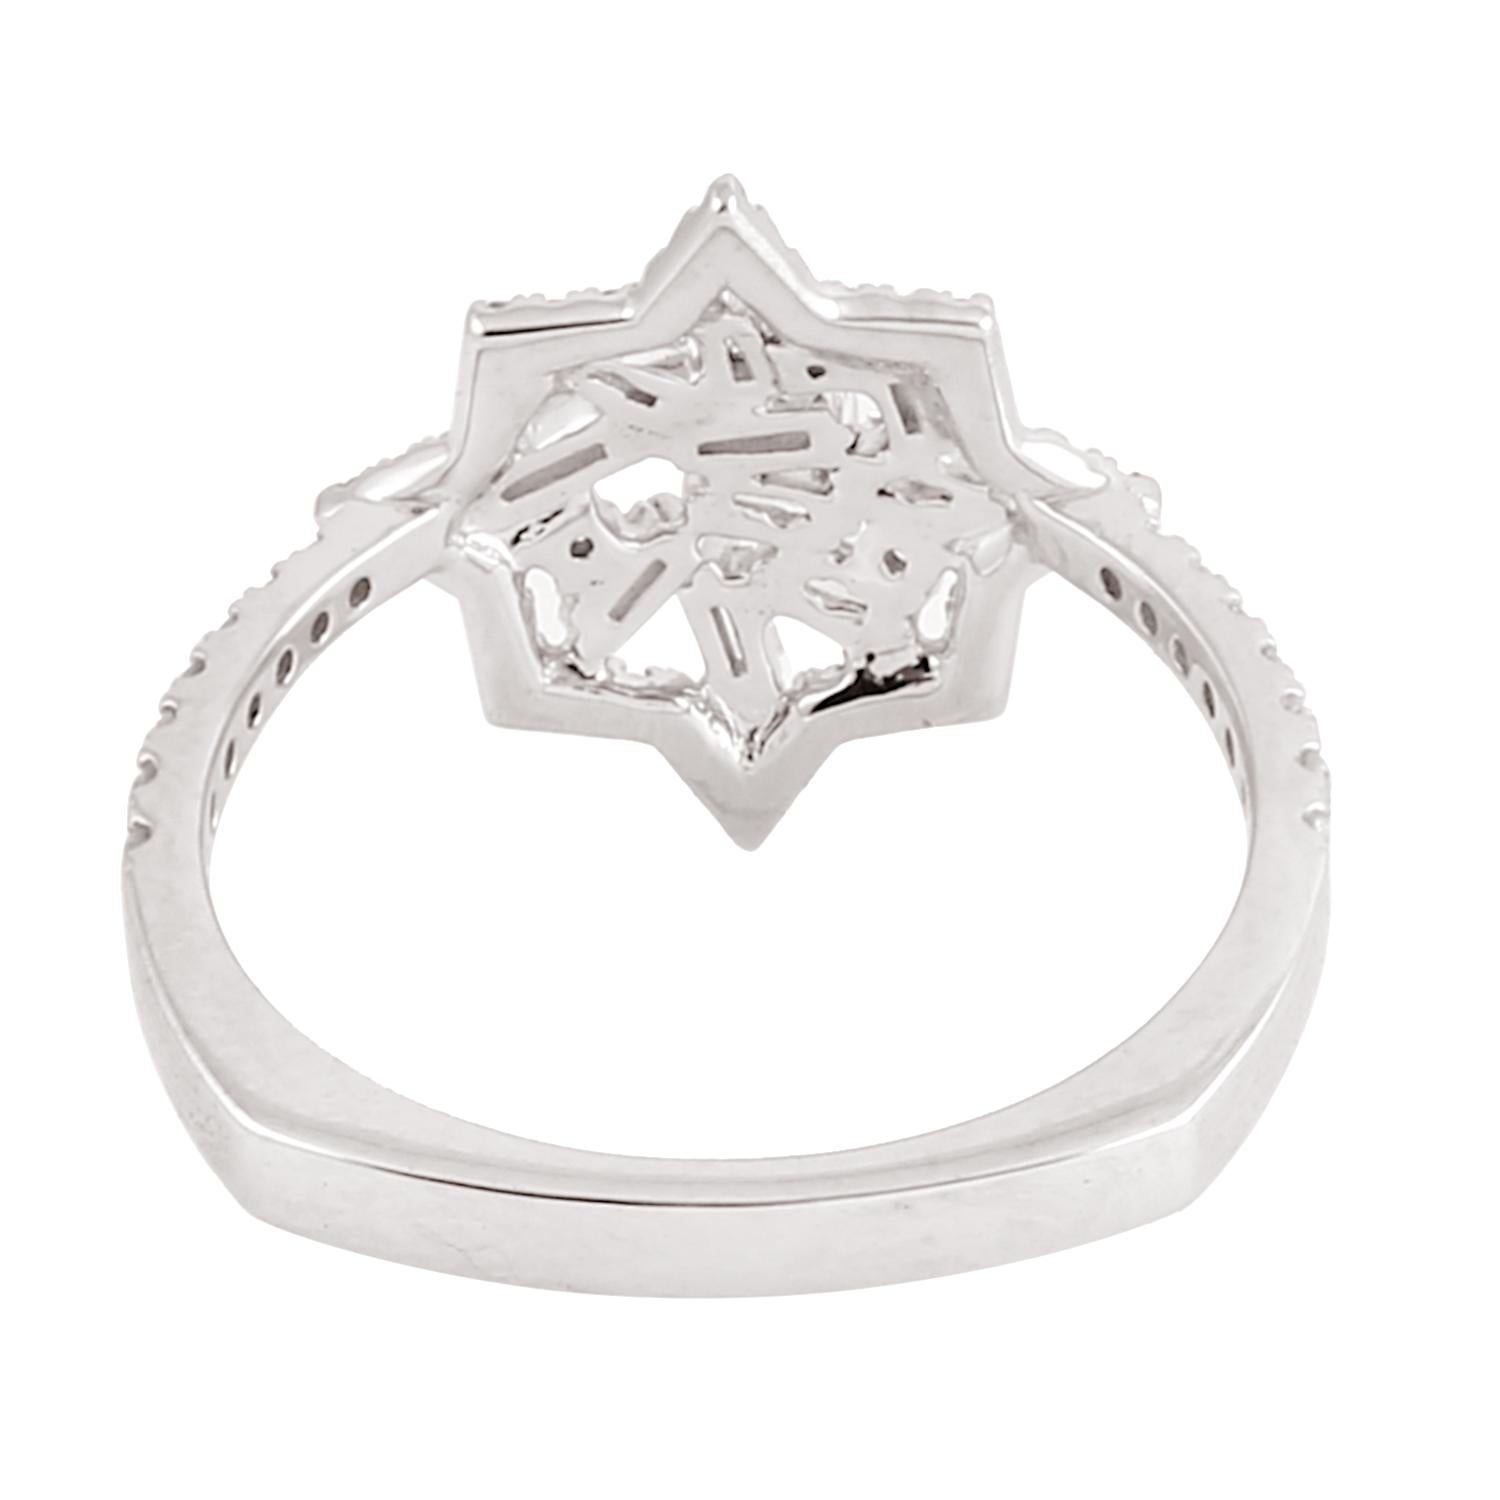 Art Nouveau Starburst Baguette Diamond Ring Made In 18k White Gold For Sale